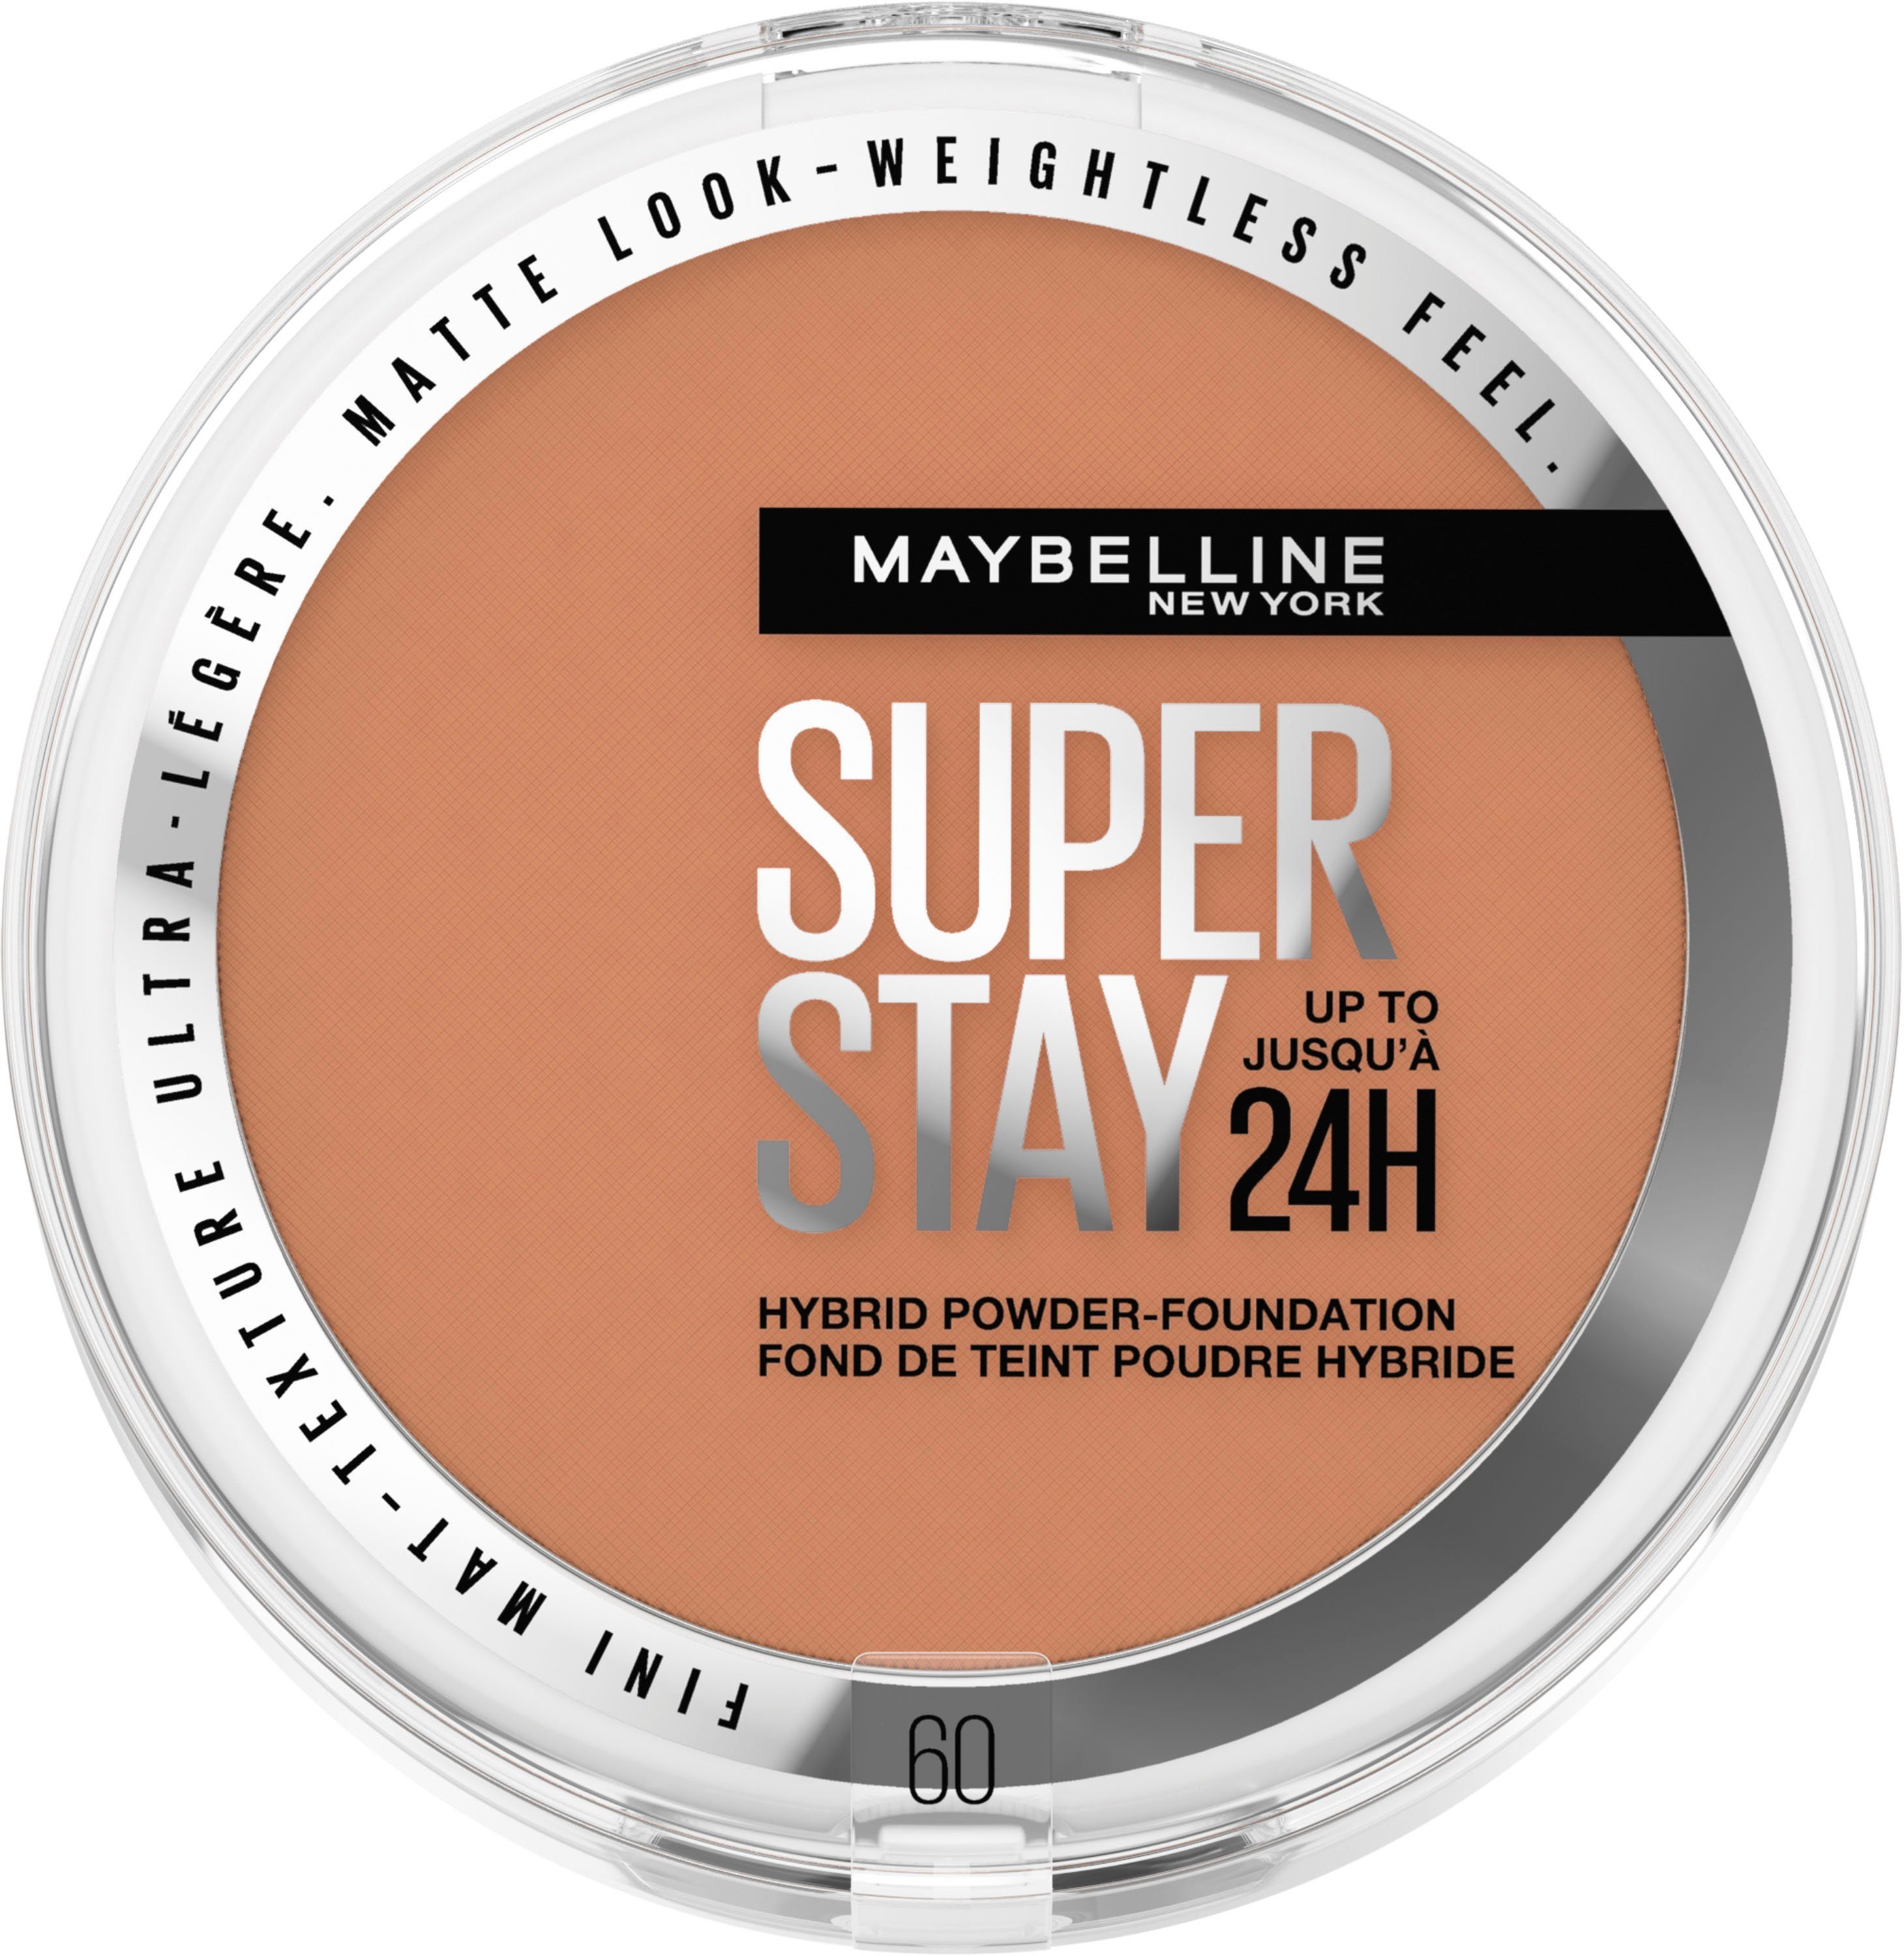 Wenn du wählst MAYBELLINE NEW YORK Foundation York New Stay Puder Maybelline Hybrides Super Make-Up